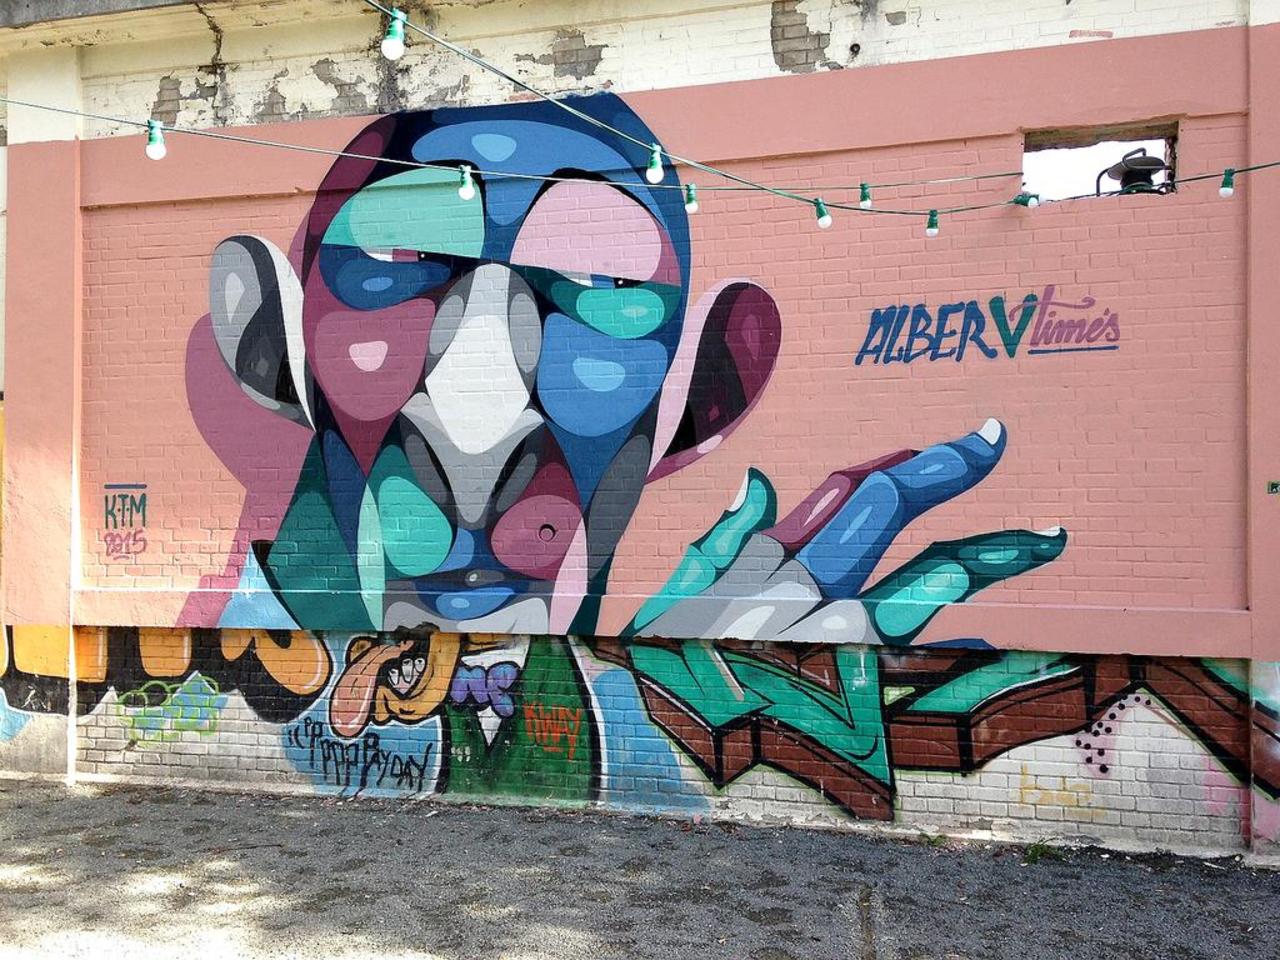 Street Art by Alber in #Bordeaux http://www.urbacolors.com #art #mural #graffiti #streetart https://t.co/ZSdBGcsbQN